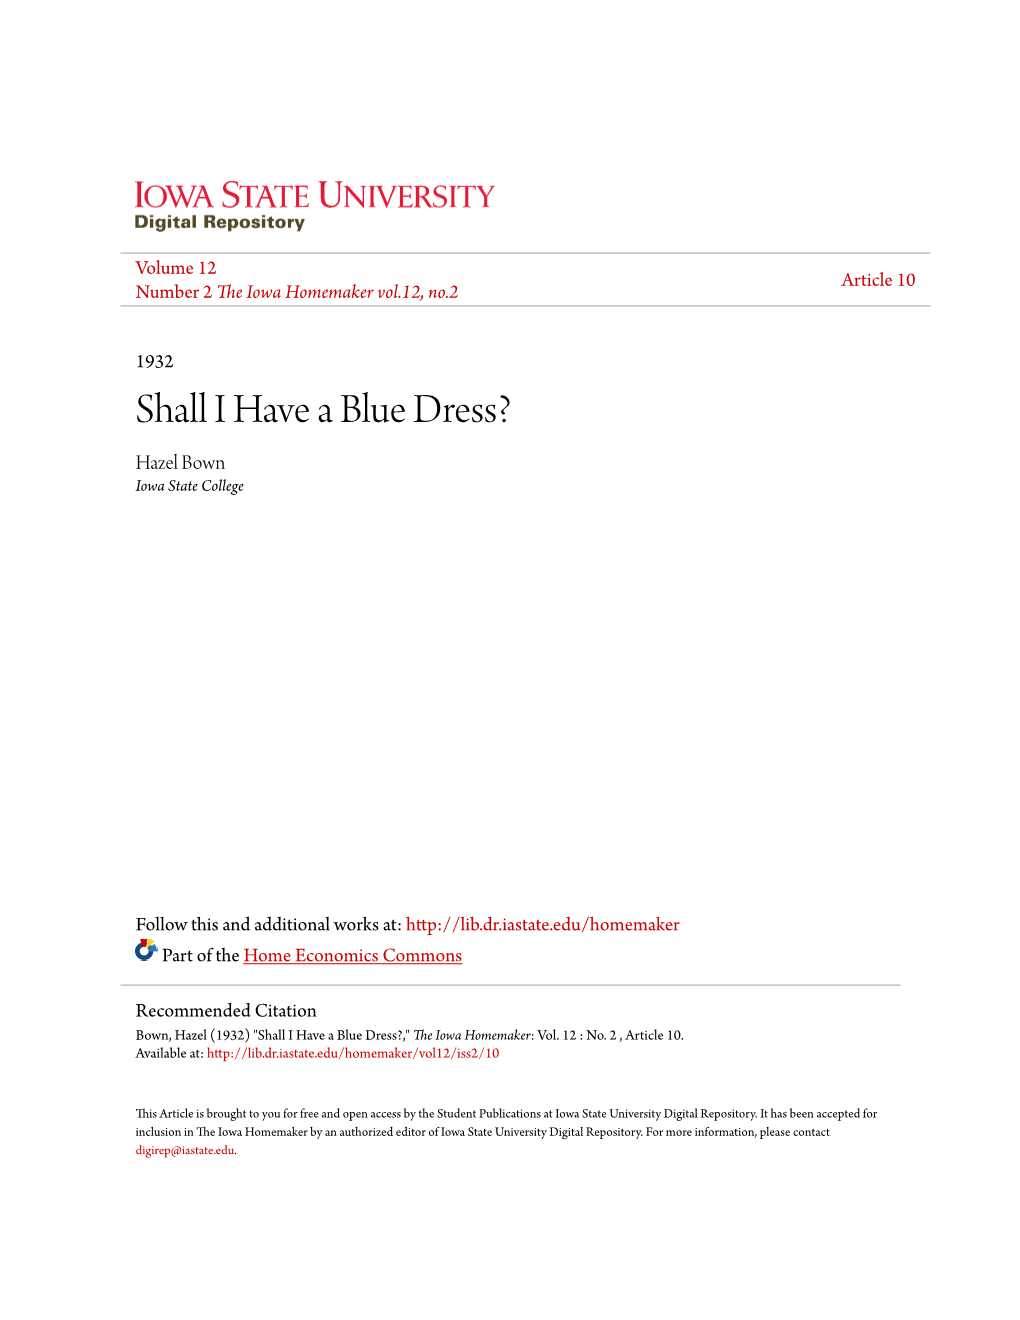 Shall I Have a Blue Dress? Hazel Bown Iowa State College